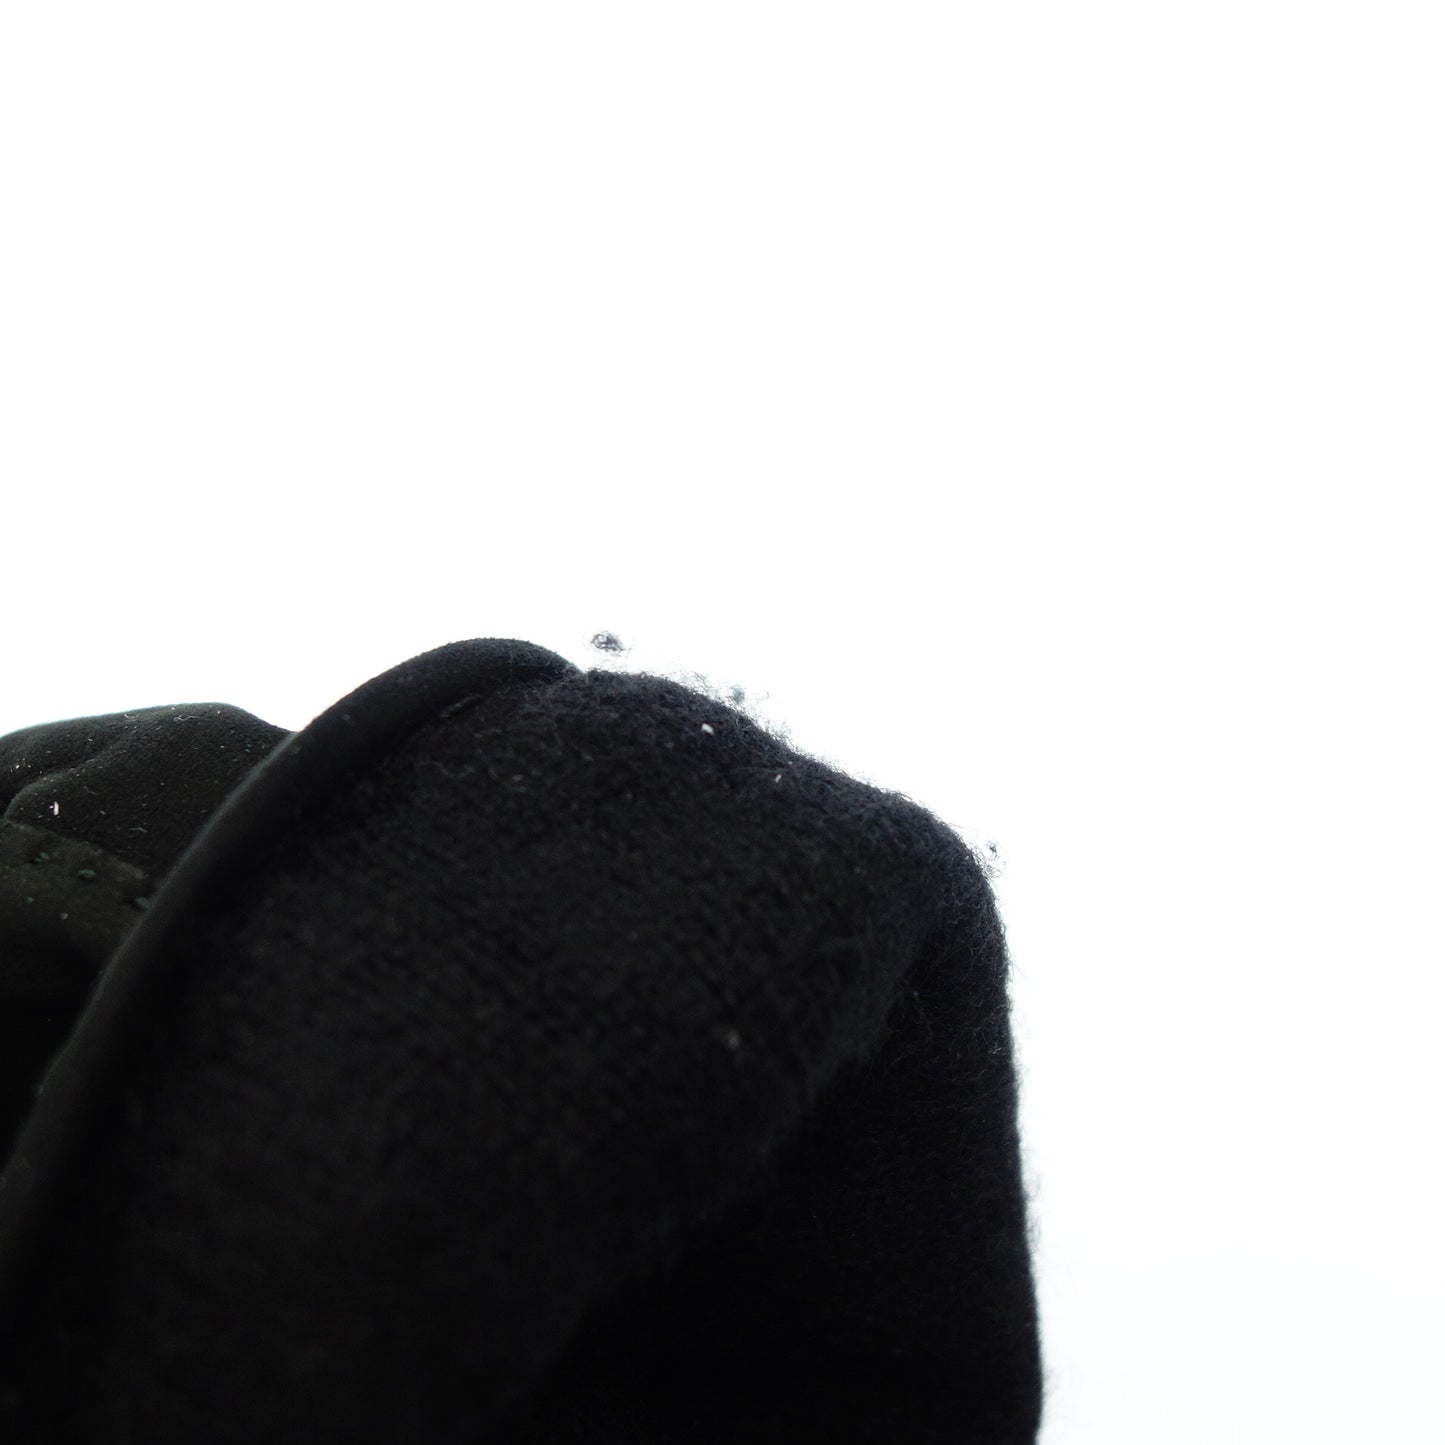 Yves Saint Laurent Suede Leather Gloves Black 9 YVES SAINT LAURENT [AFI20] [Used] 